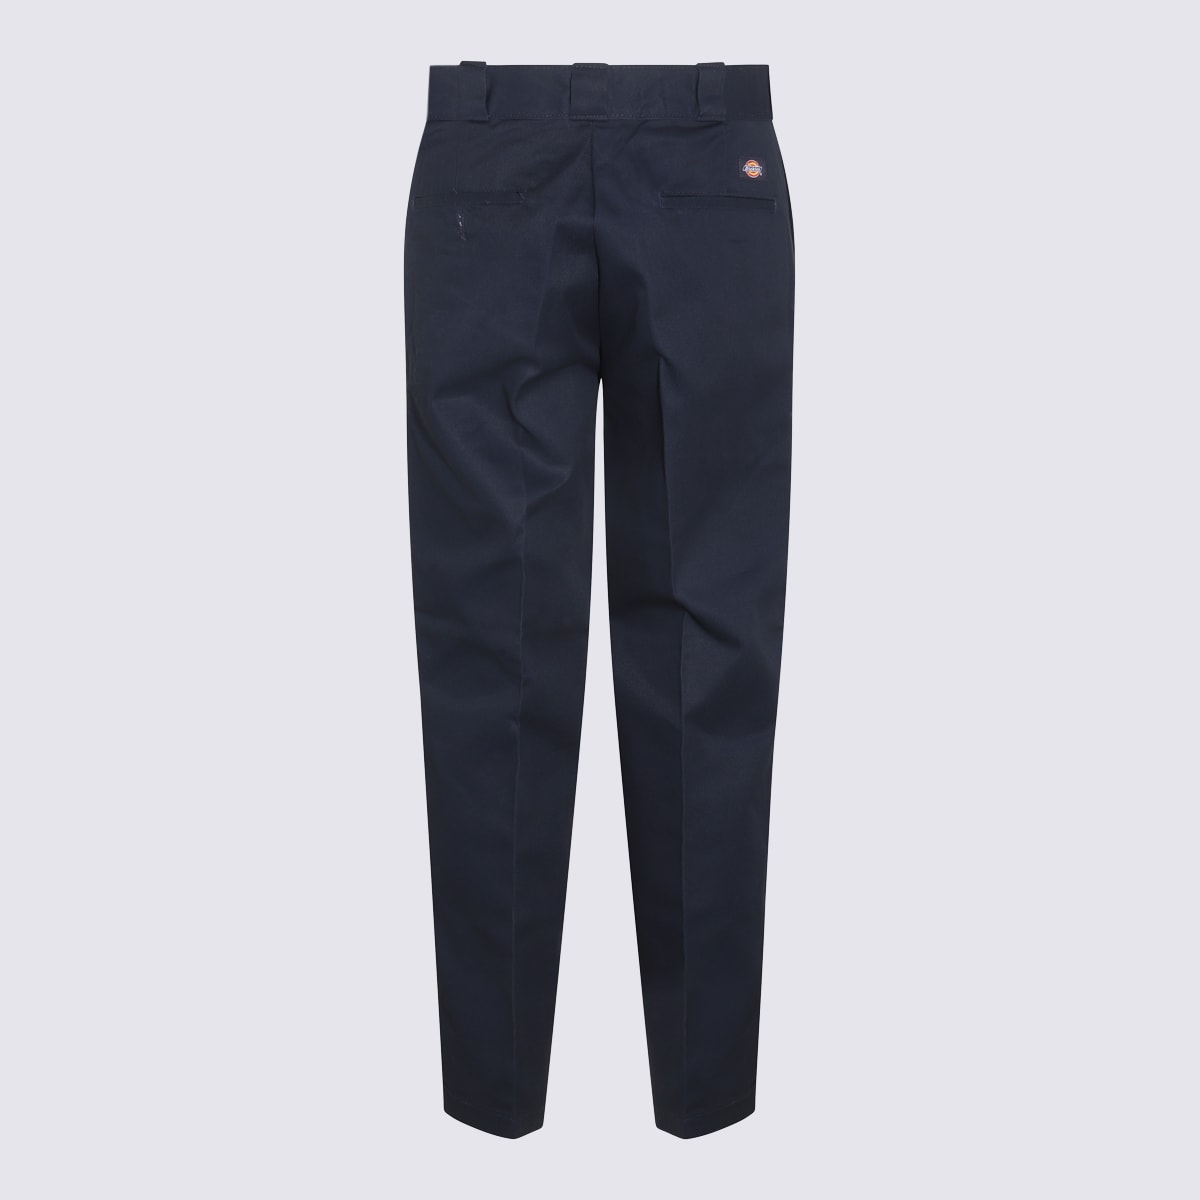 Shop Dickies Navy Blue Cotton Pants